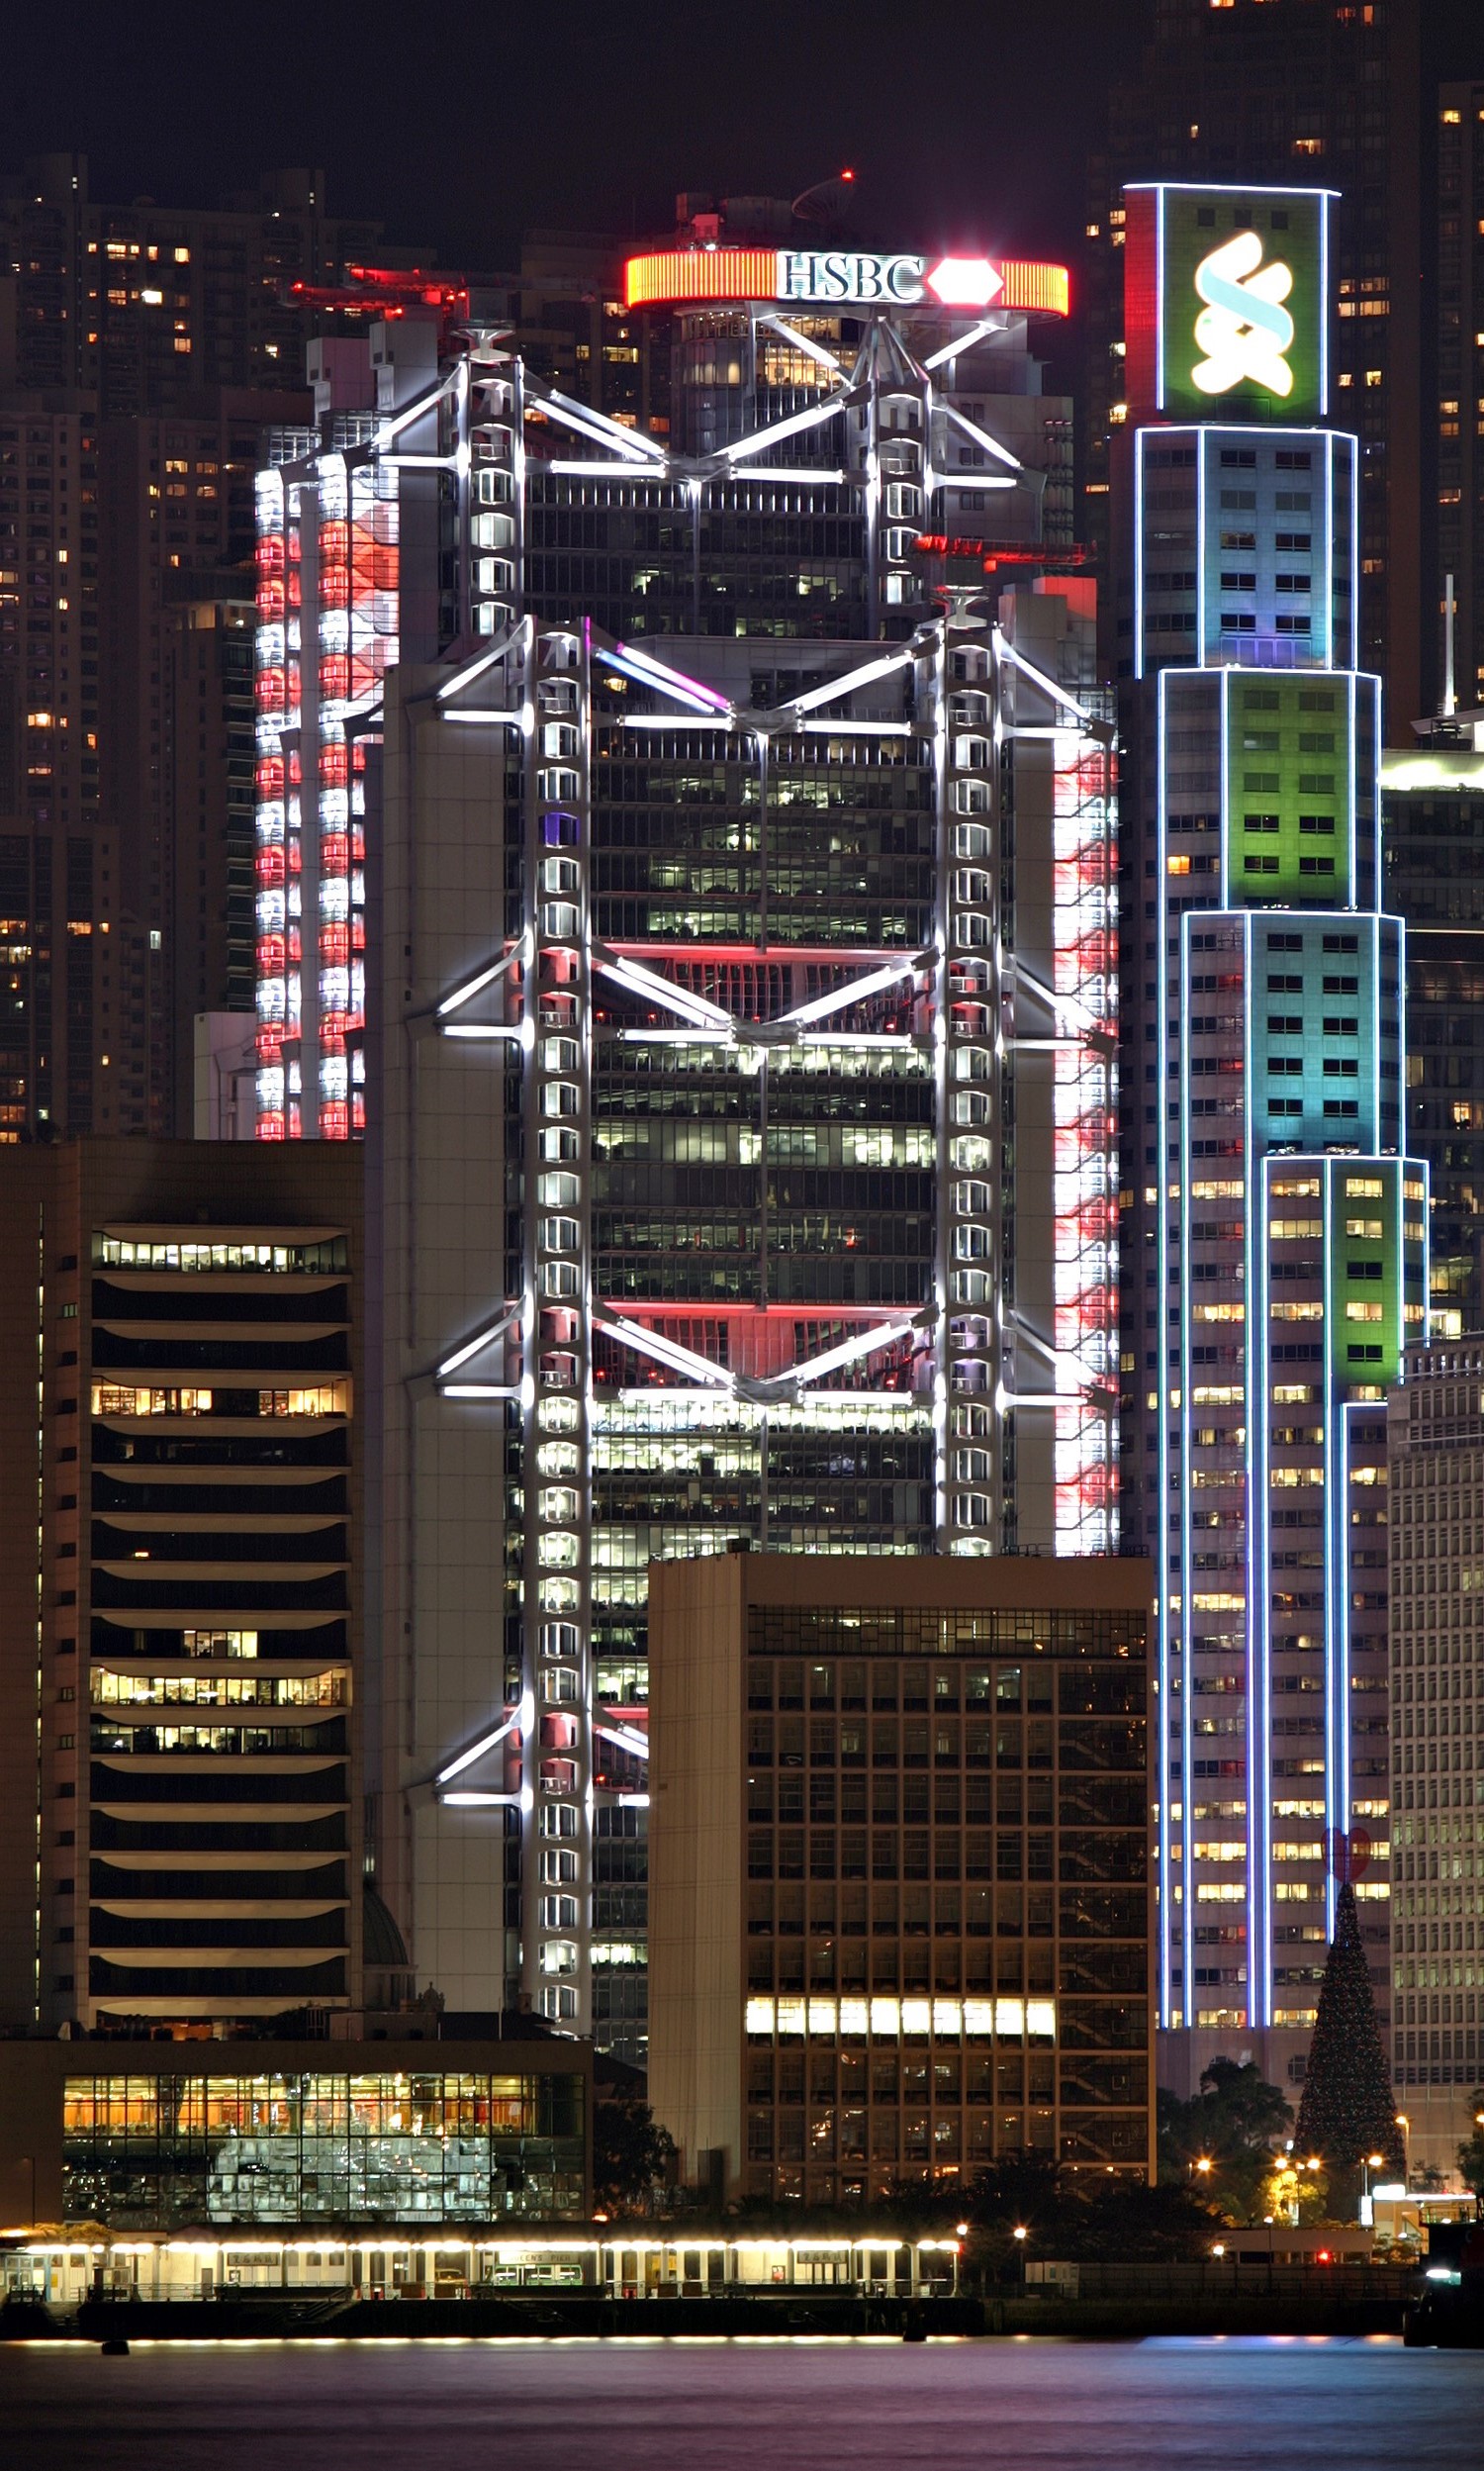 HSBC Headquarters, Hong Kong - Night view from Kowloon. © Mathias Beinling